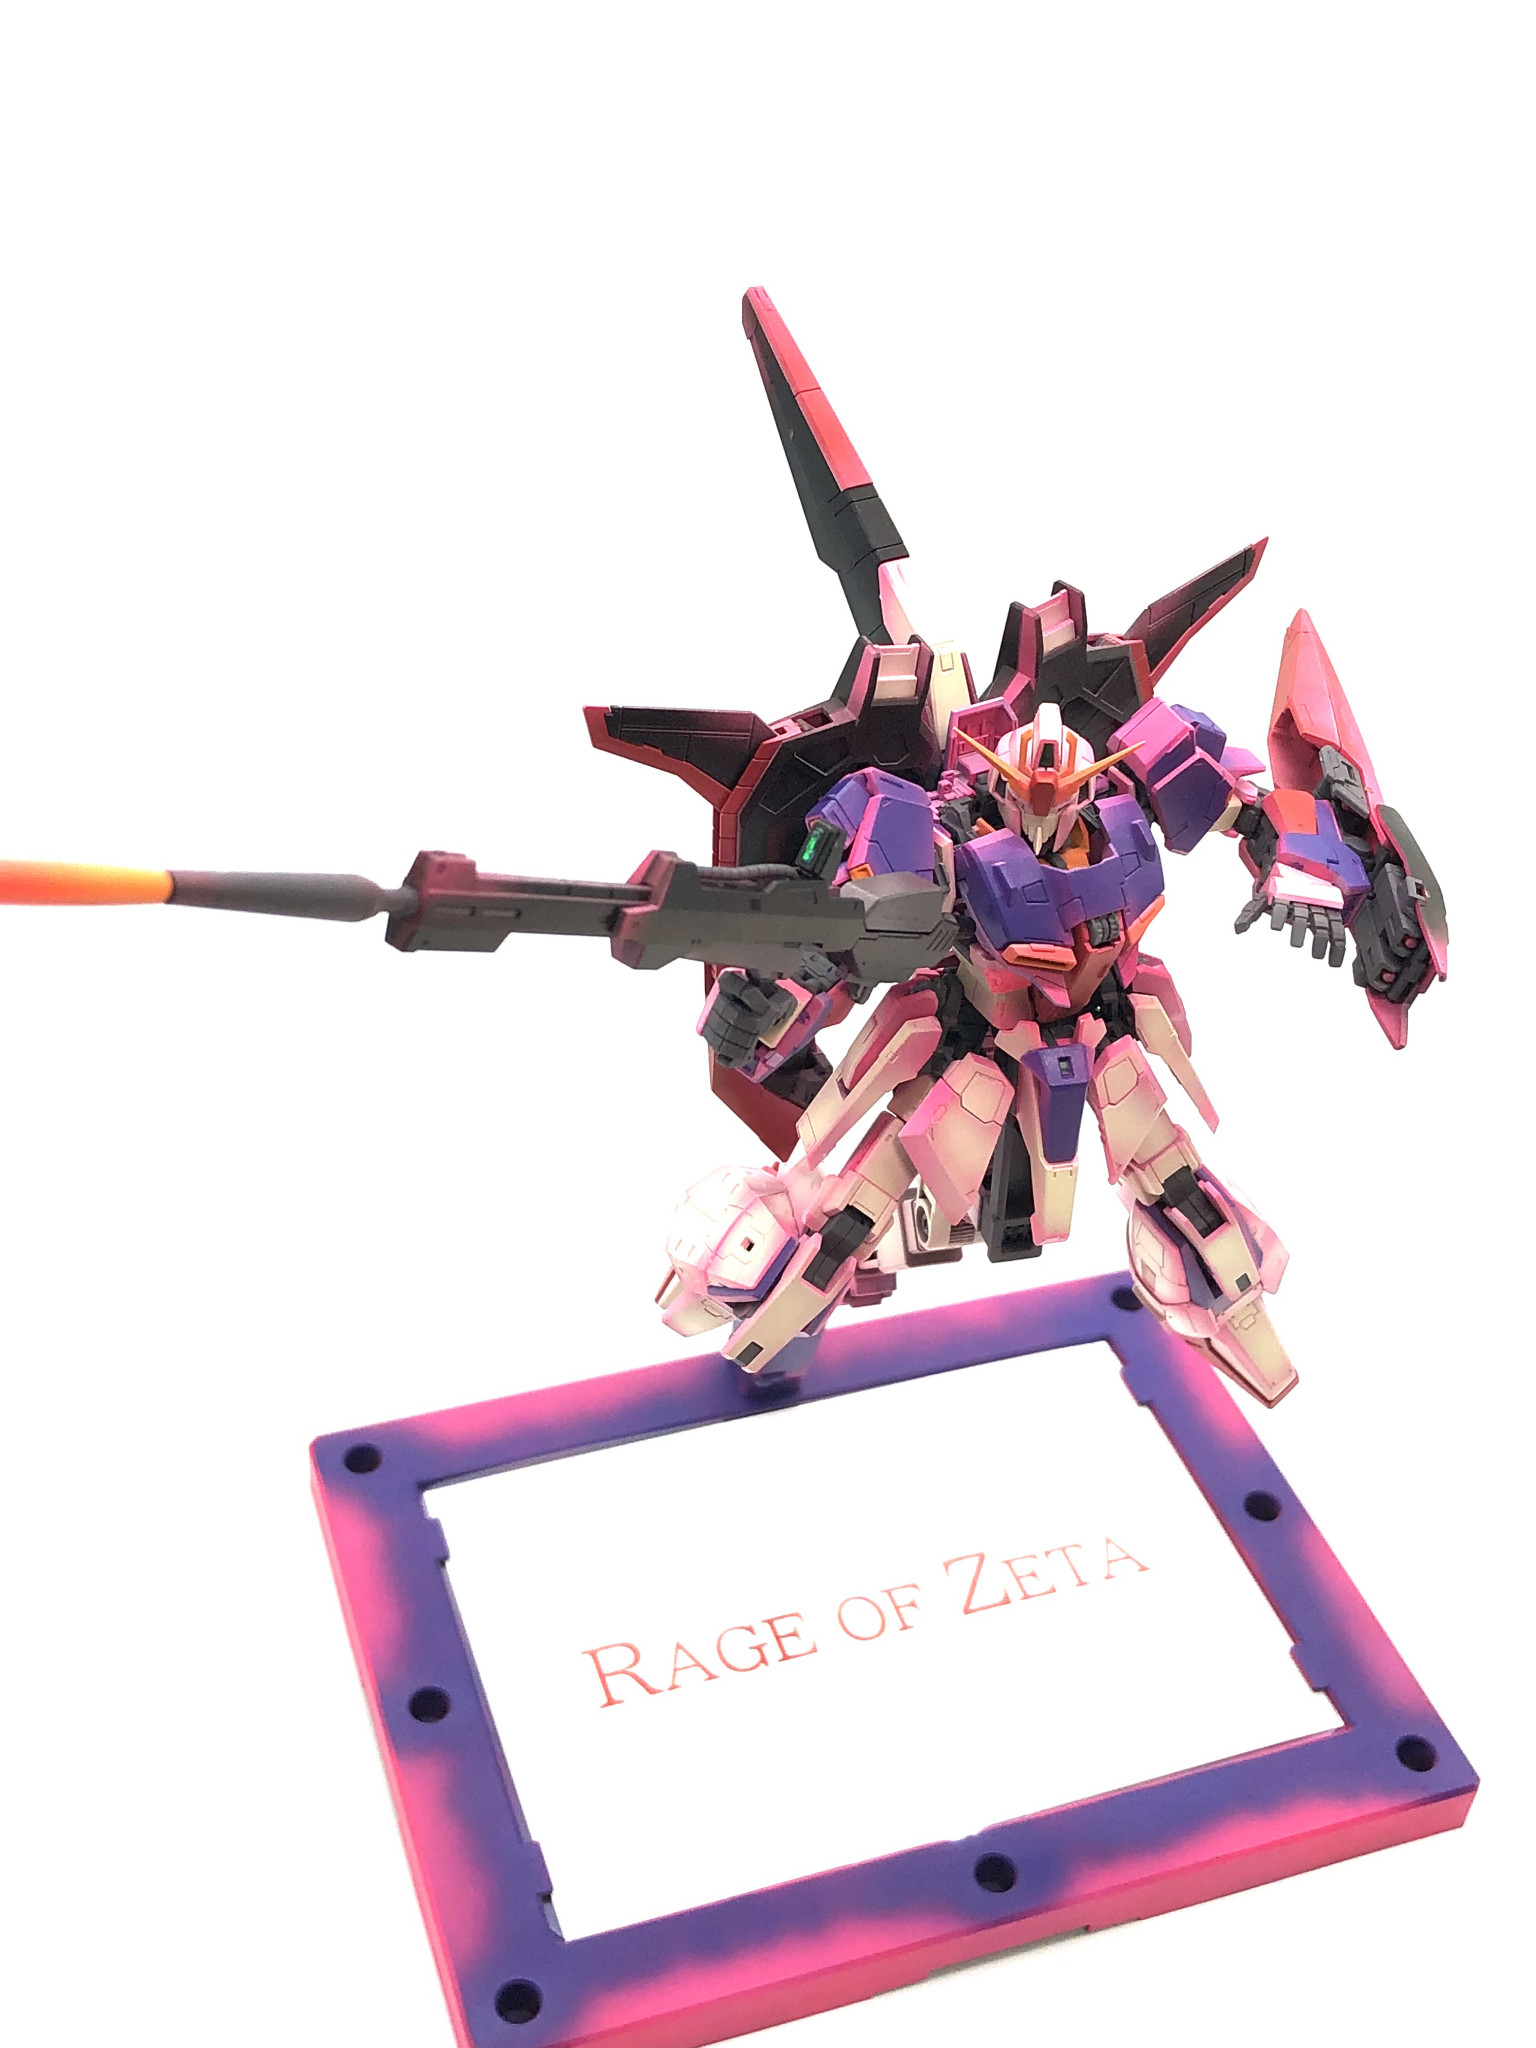 Rage Of Zeta Rg1 144 ゼータガンダム Daimonjiさんのガンプラ作品 Gunsta ガンスタ